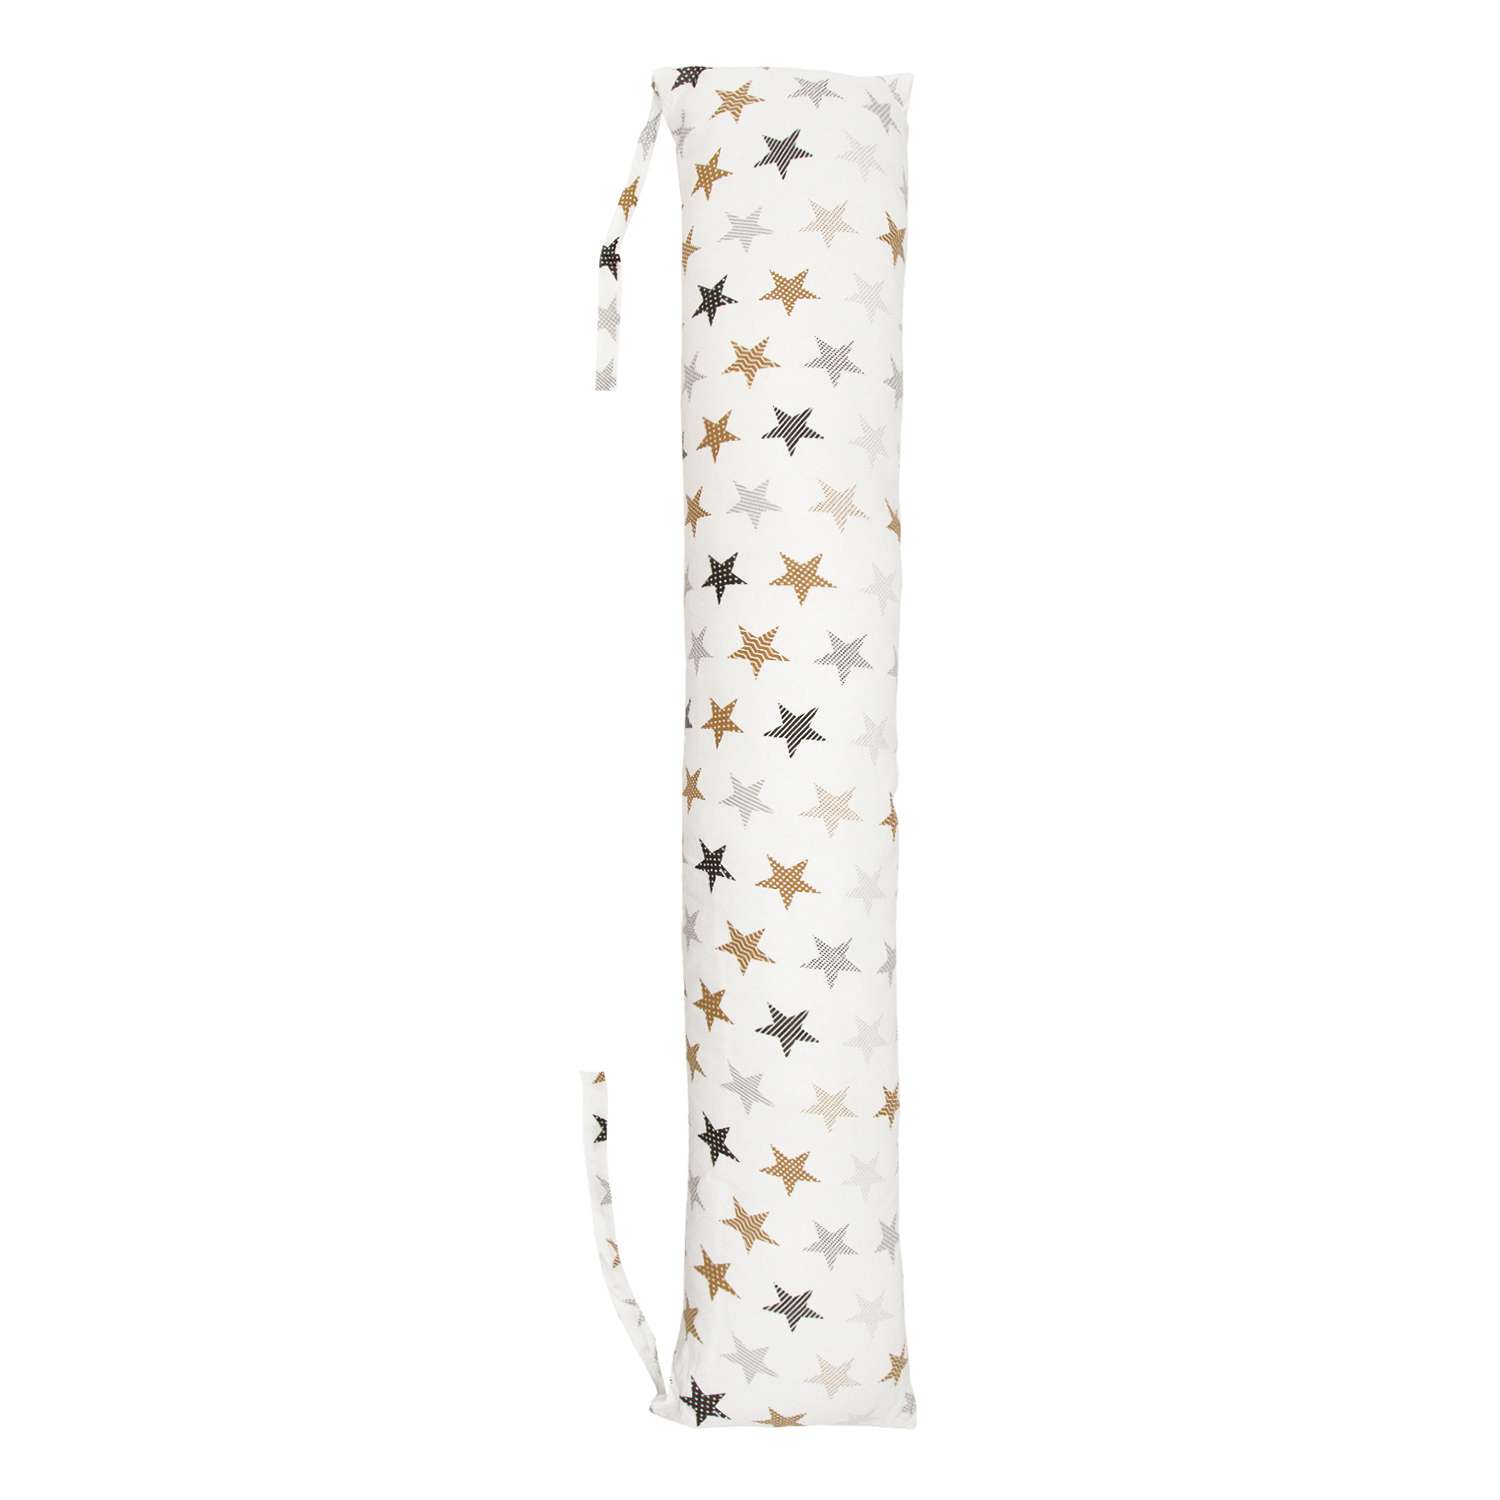 Подушка AmaroBaby для беременных валик 170х35 см Звезды пэчворк белый - фото 1